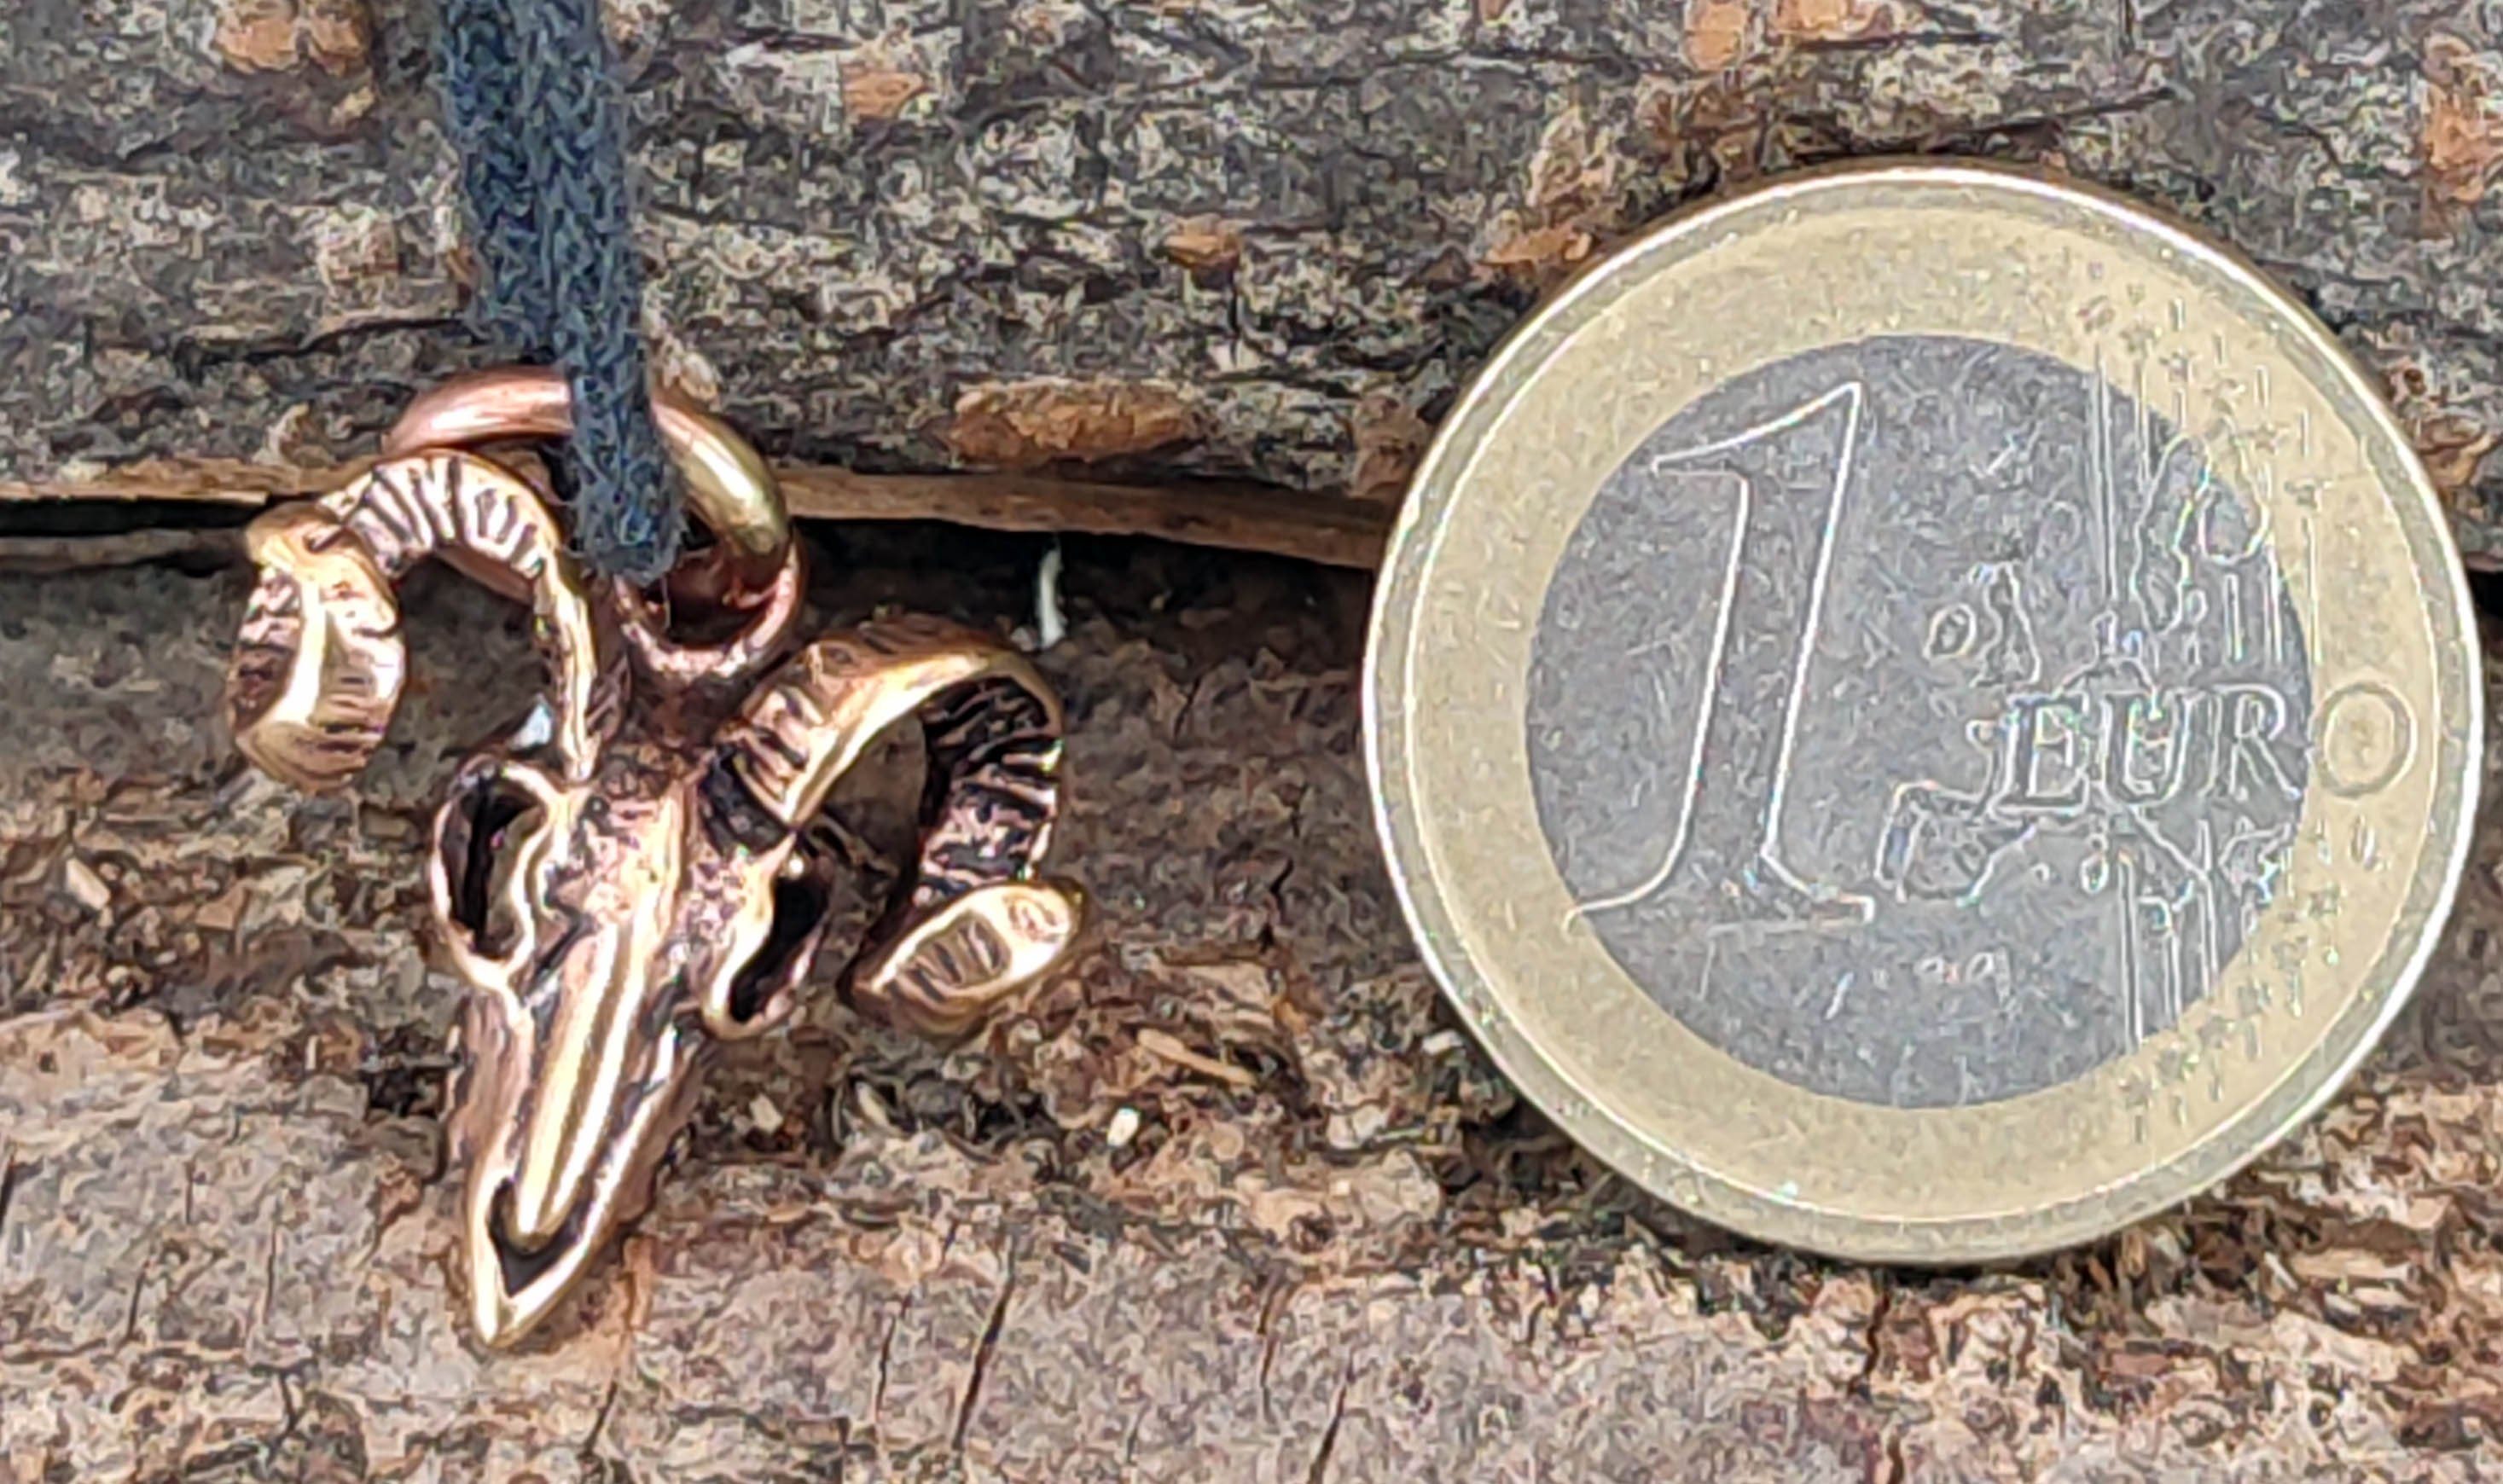 Widderschädel Bulle Kettenanhänger Anhänger Kiss Leather Widderkopf Metal Widder Bronze of Schädel